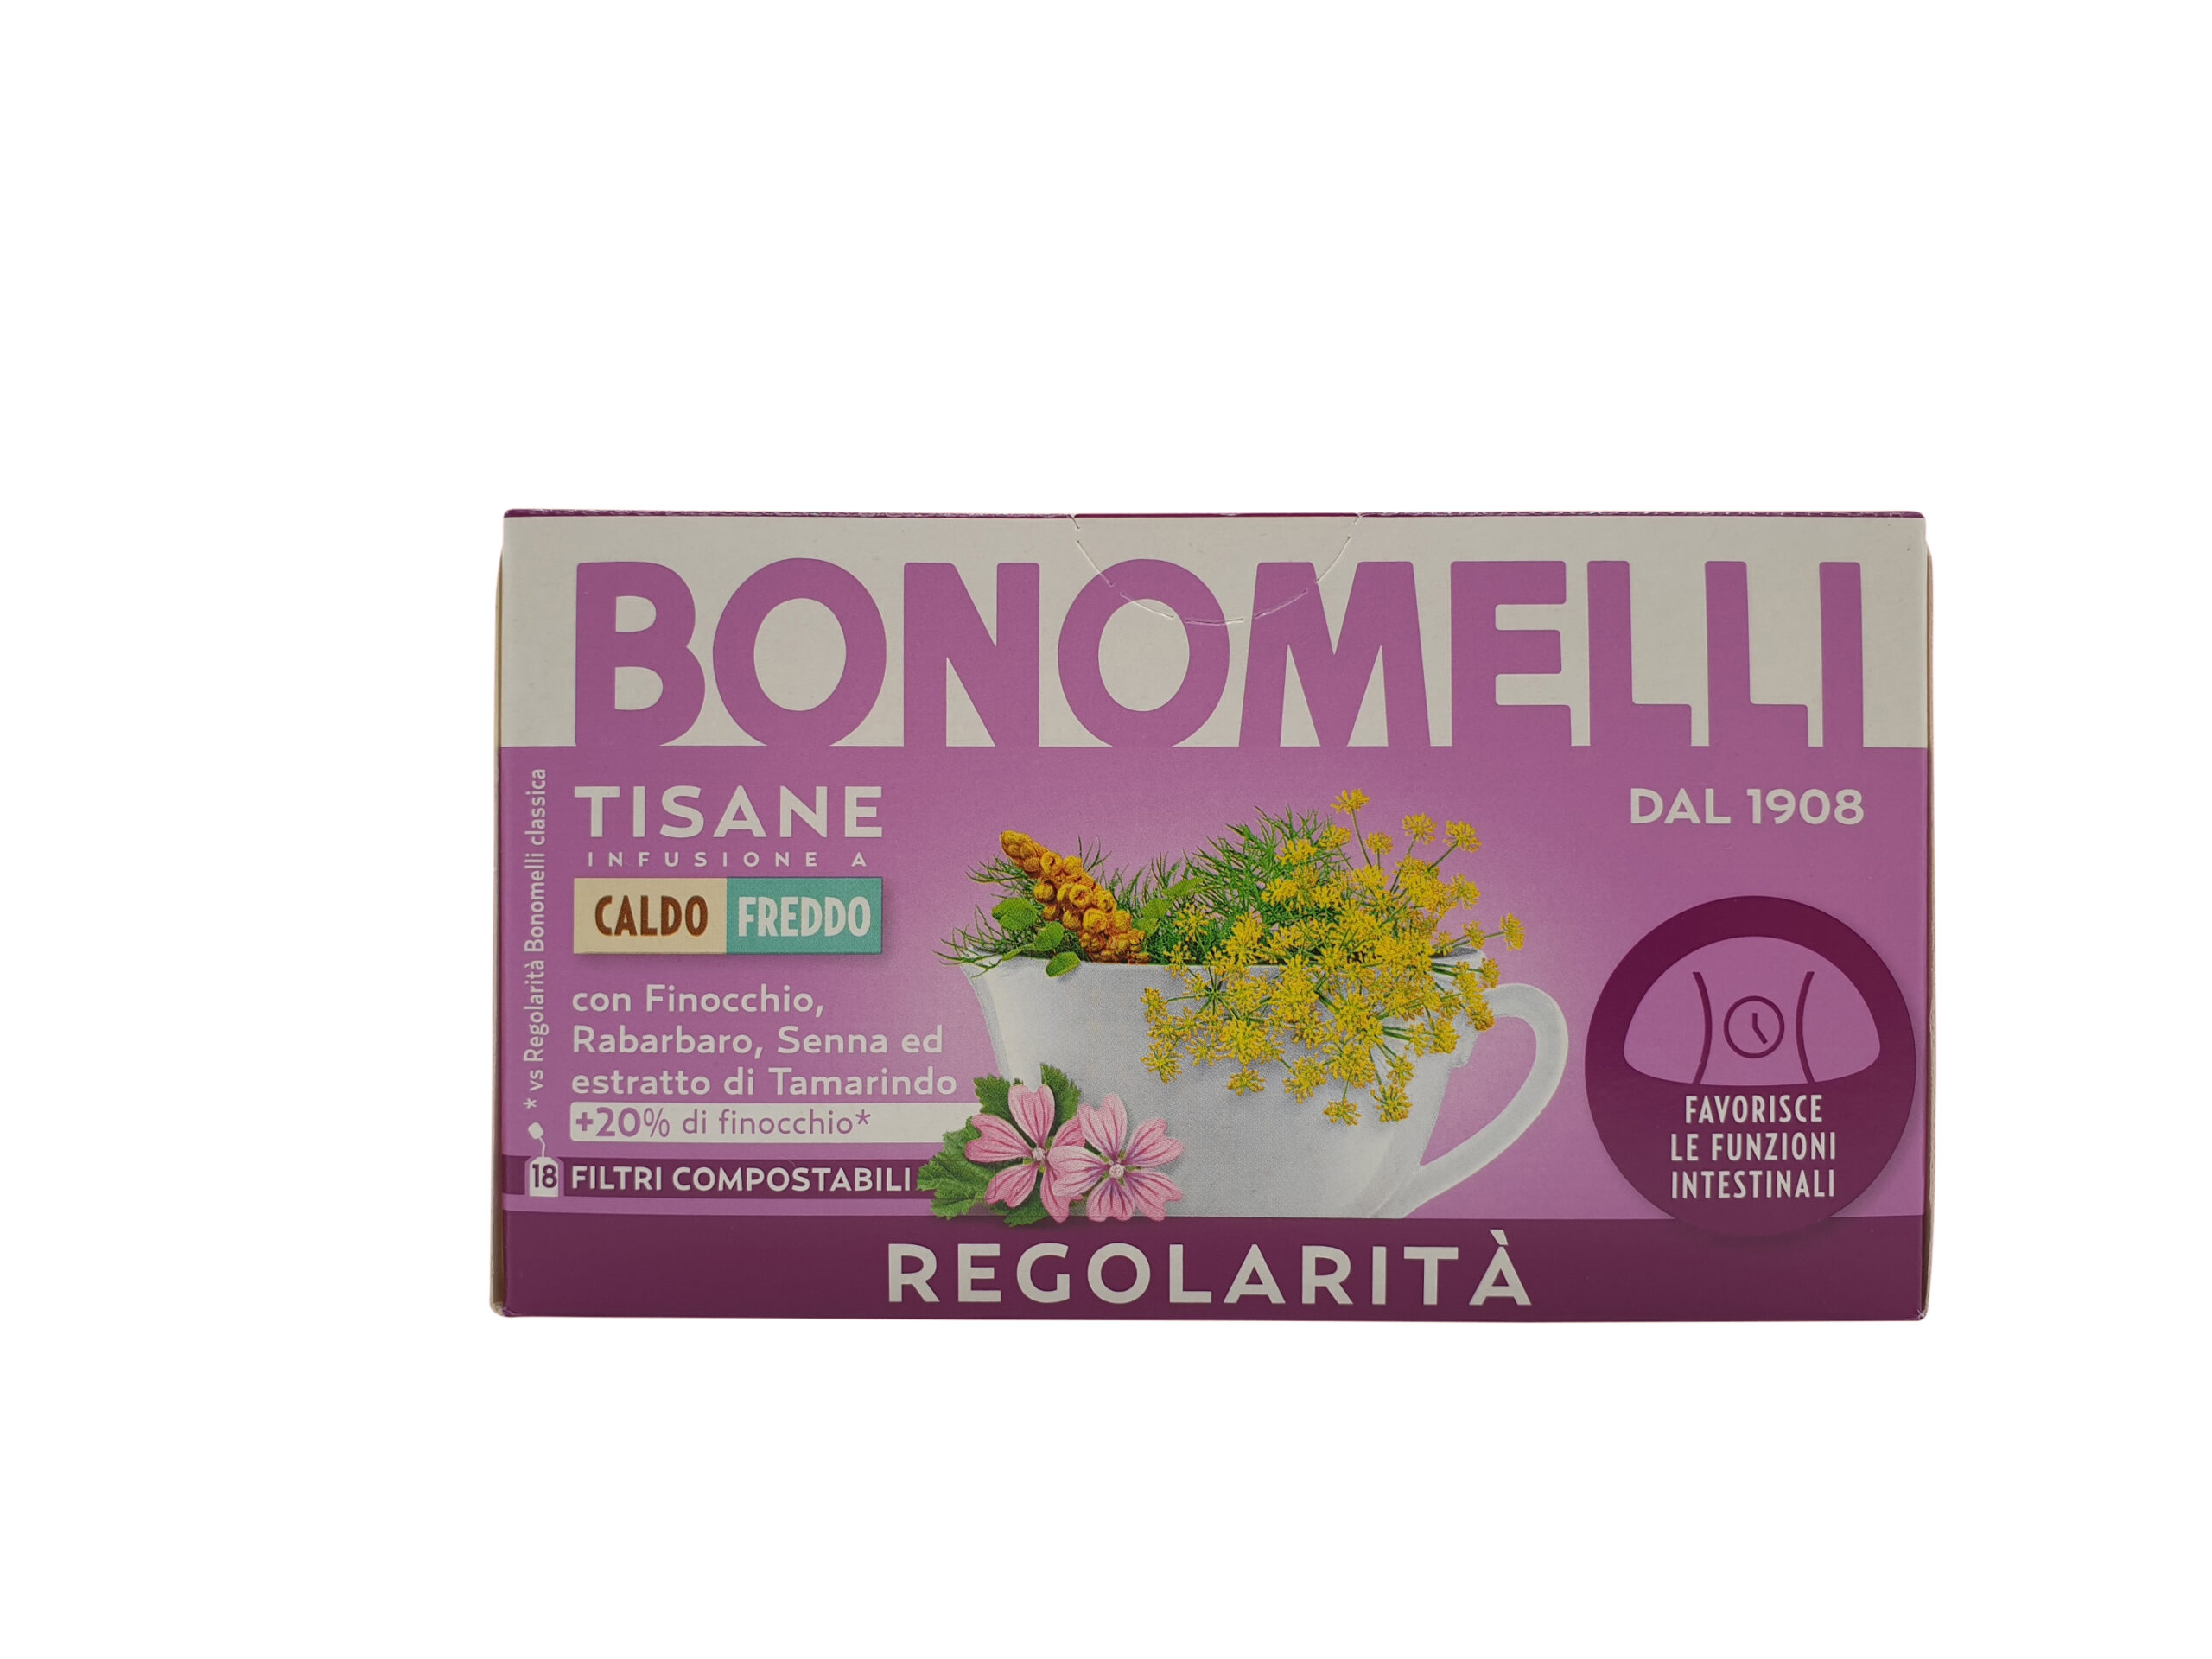 Bonomelli, Camomilla, Bonomelli Regularity Tisane, Tisane